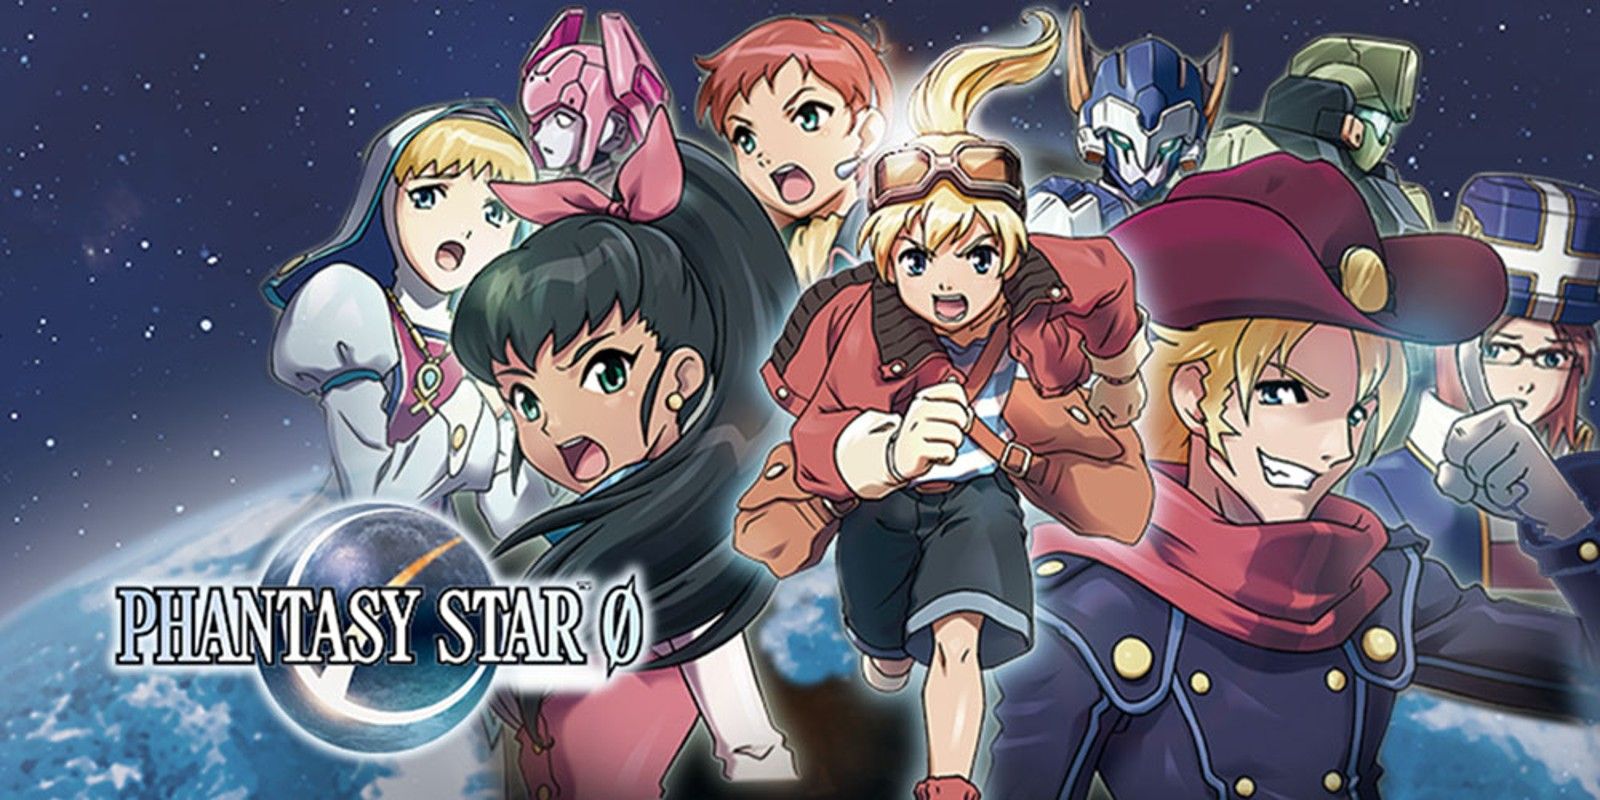 Phantasy Star 0 Promotional Image